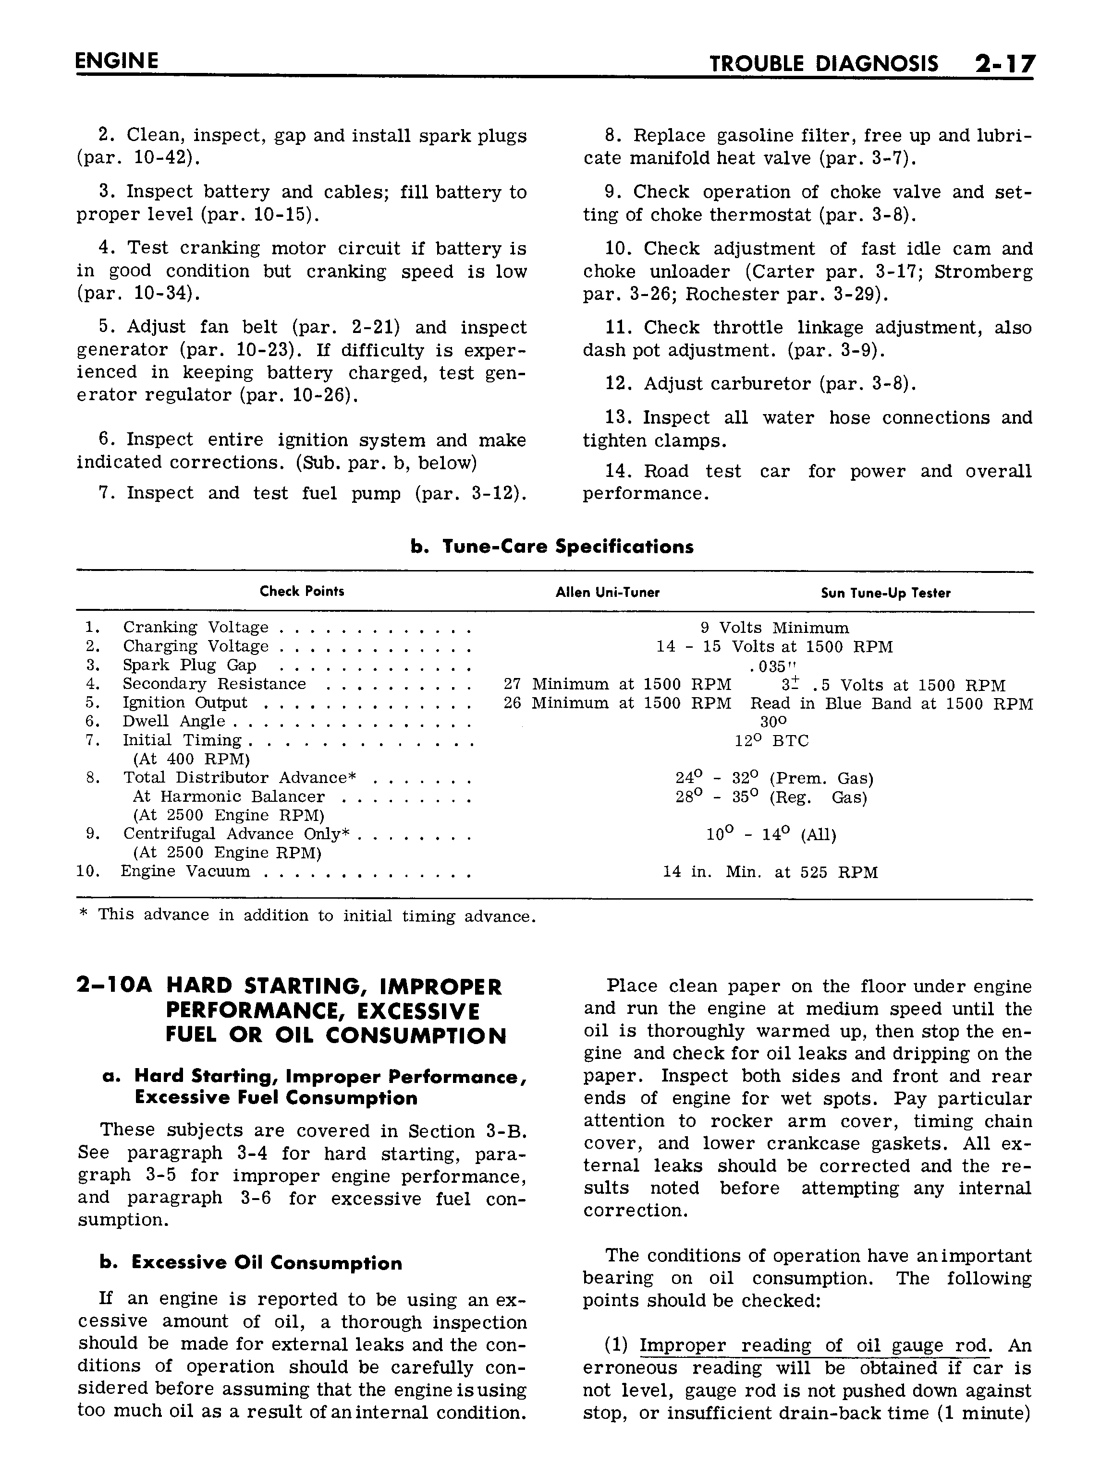 n_03 1961 Buick Shop Manual - Engine-017-017.jpg